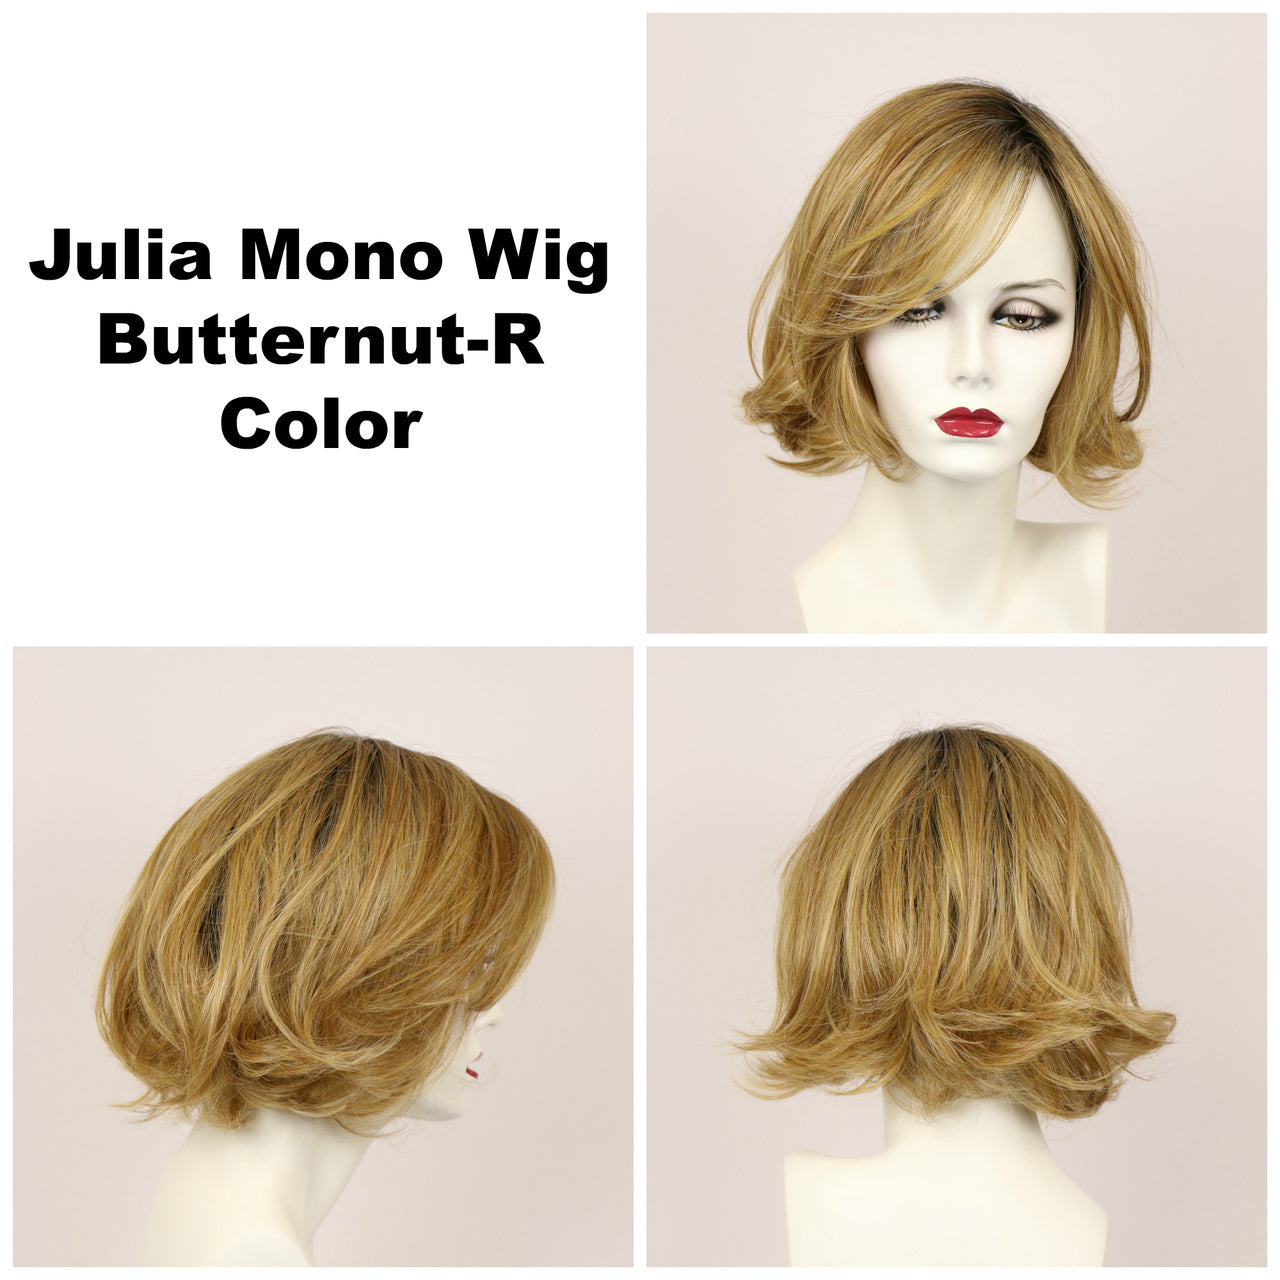 Butternut-R / Julia Lace Front w/ Roots / Medium Wig